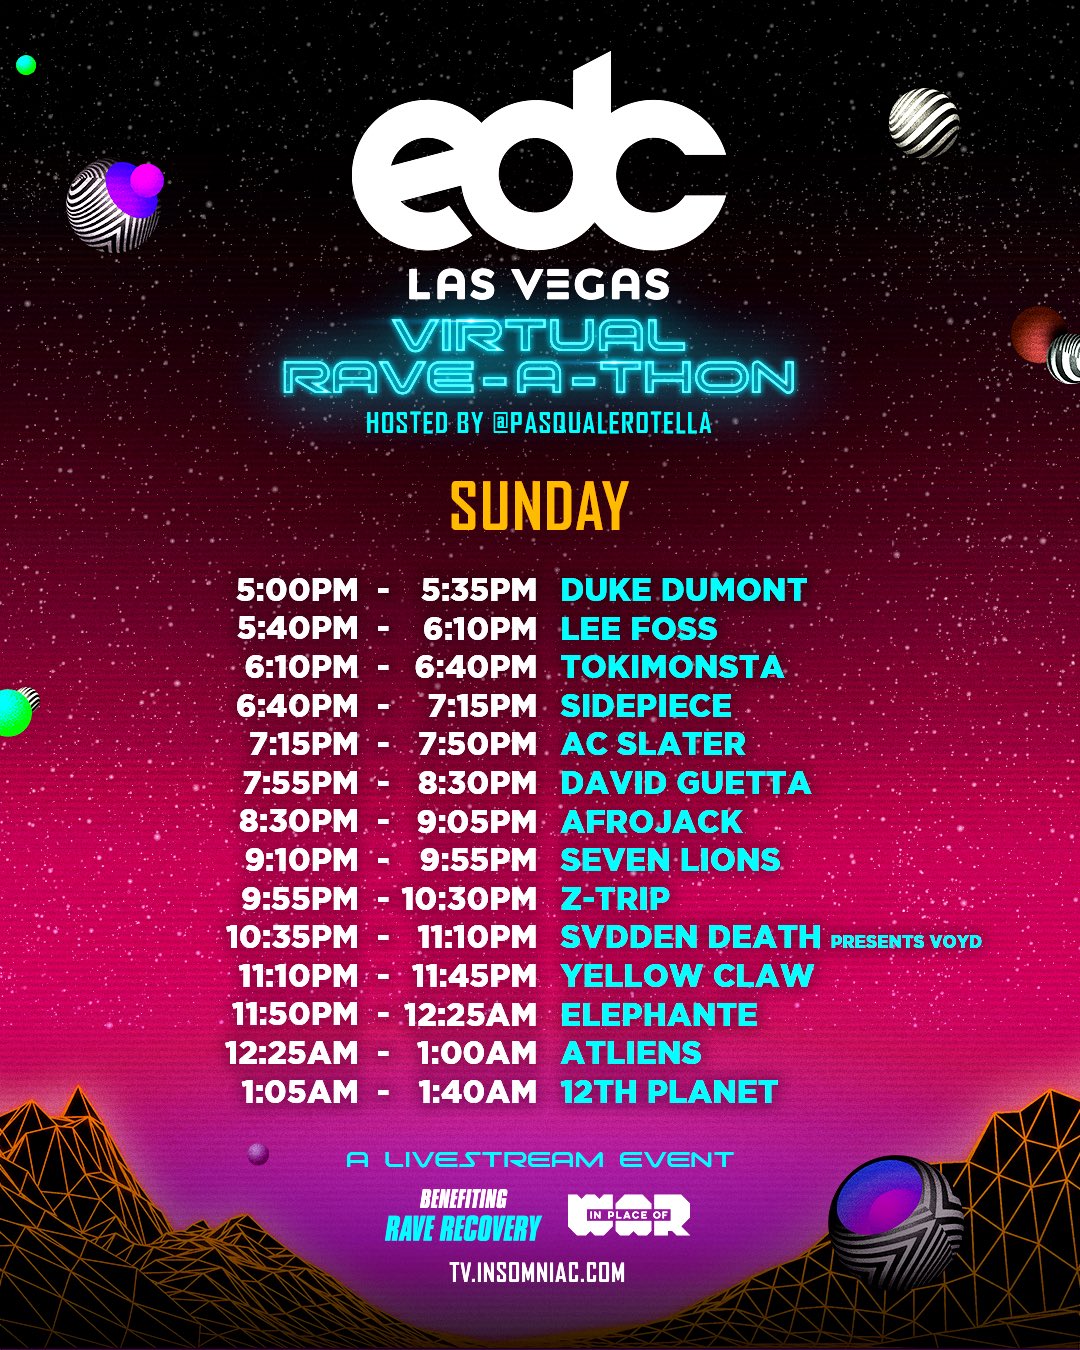 EDC Las Vegas Virtual Rave-A-Thon Schedule - Sunday